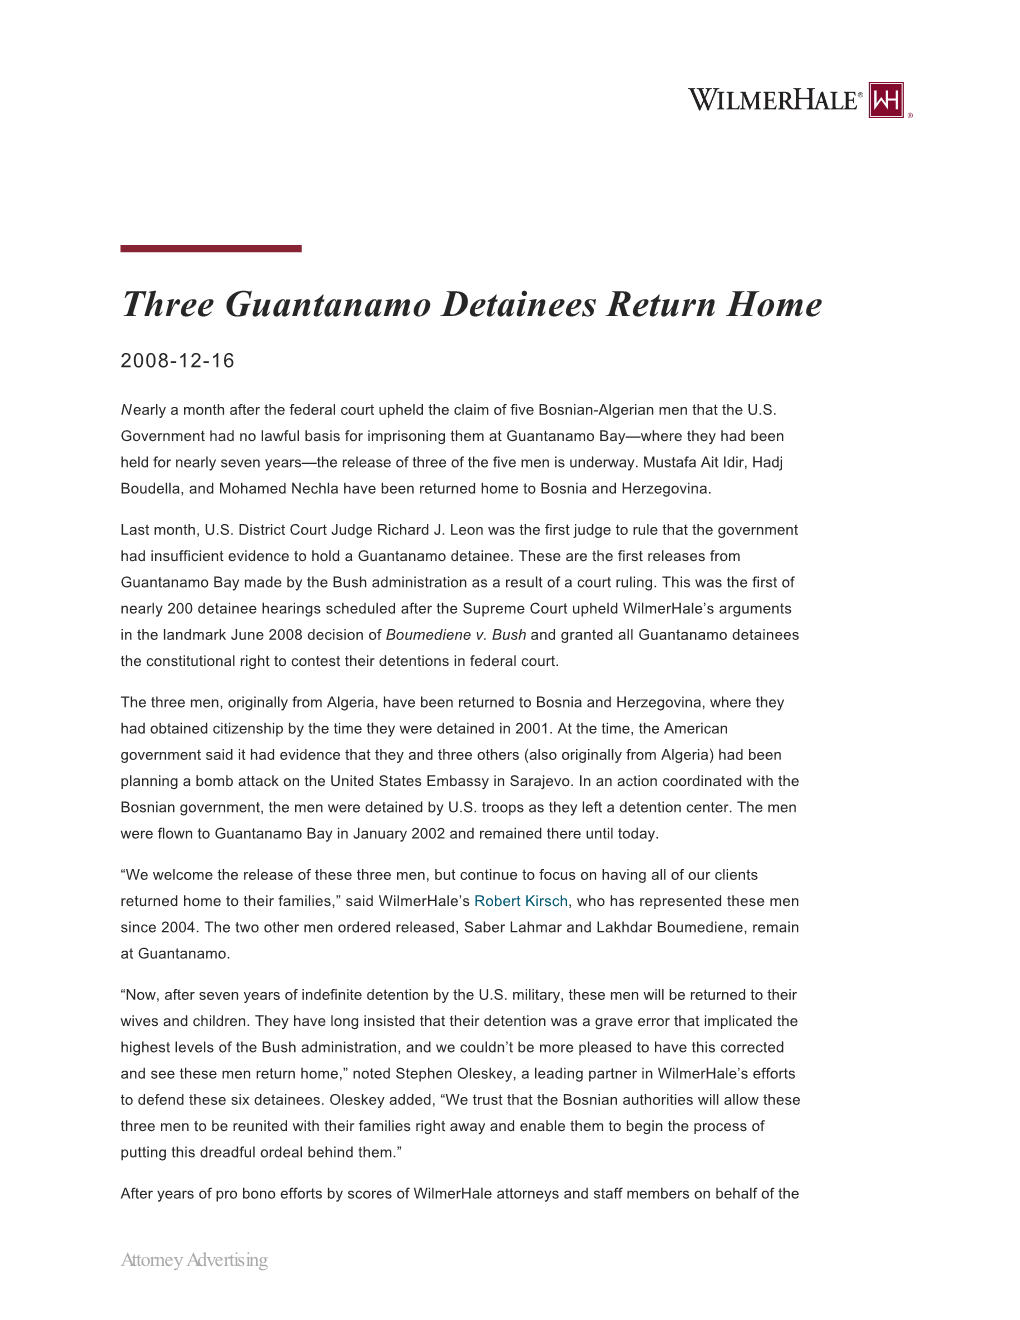 Three Guantanamo Detainees Return Home | Wilmerhale